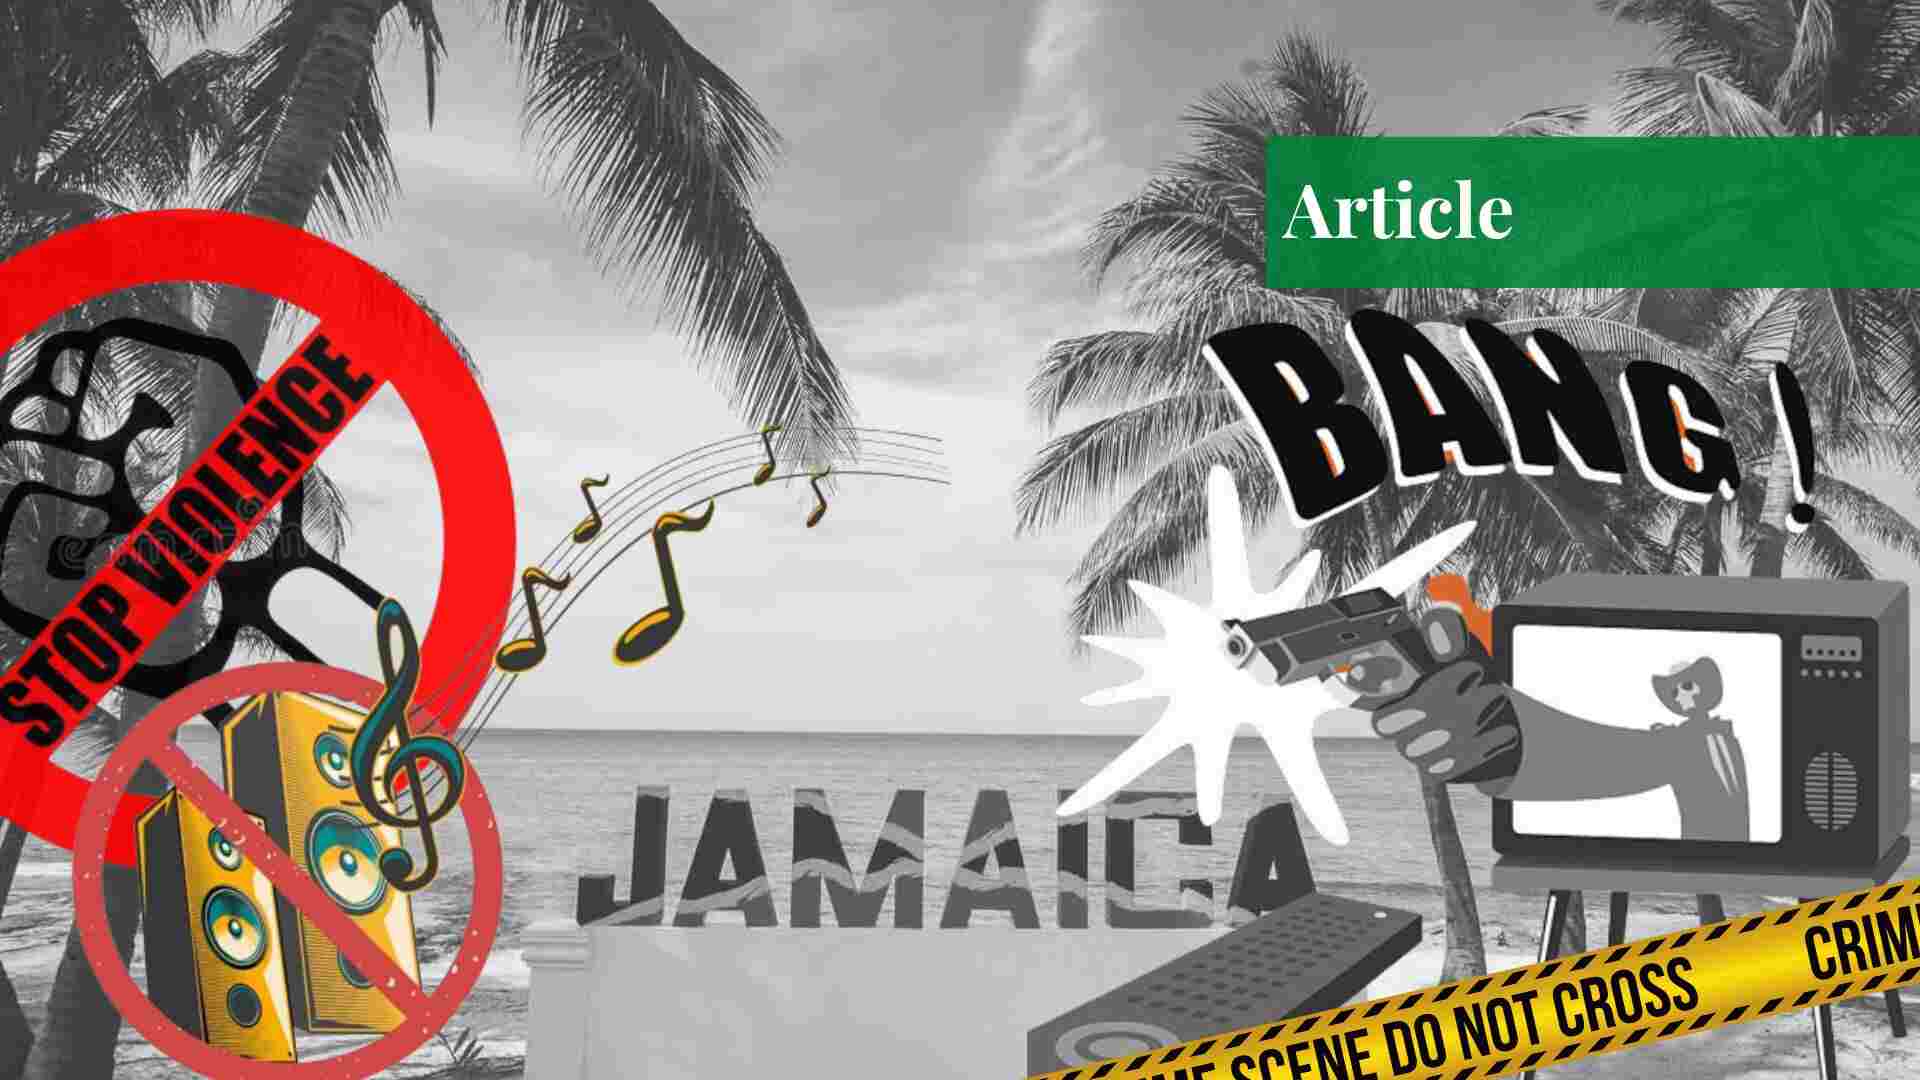 impact of dancehall music on jamaican society